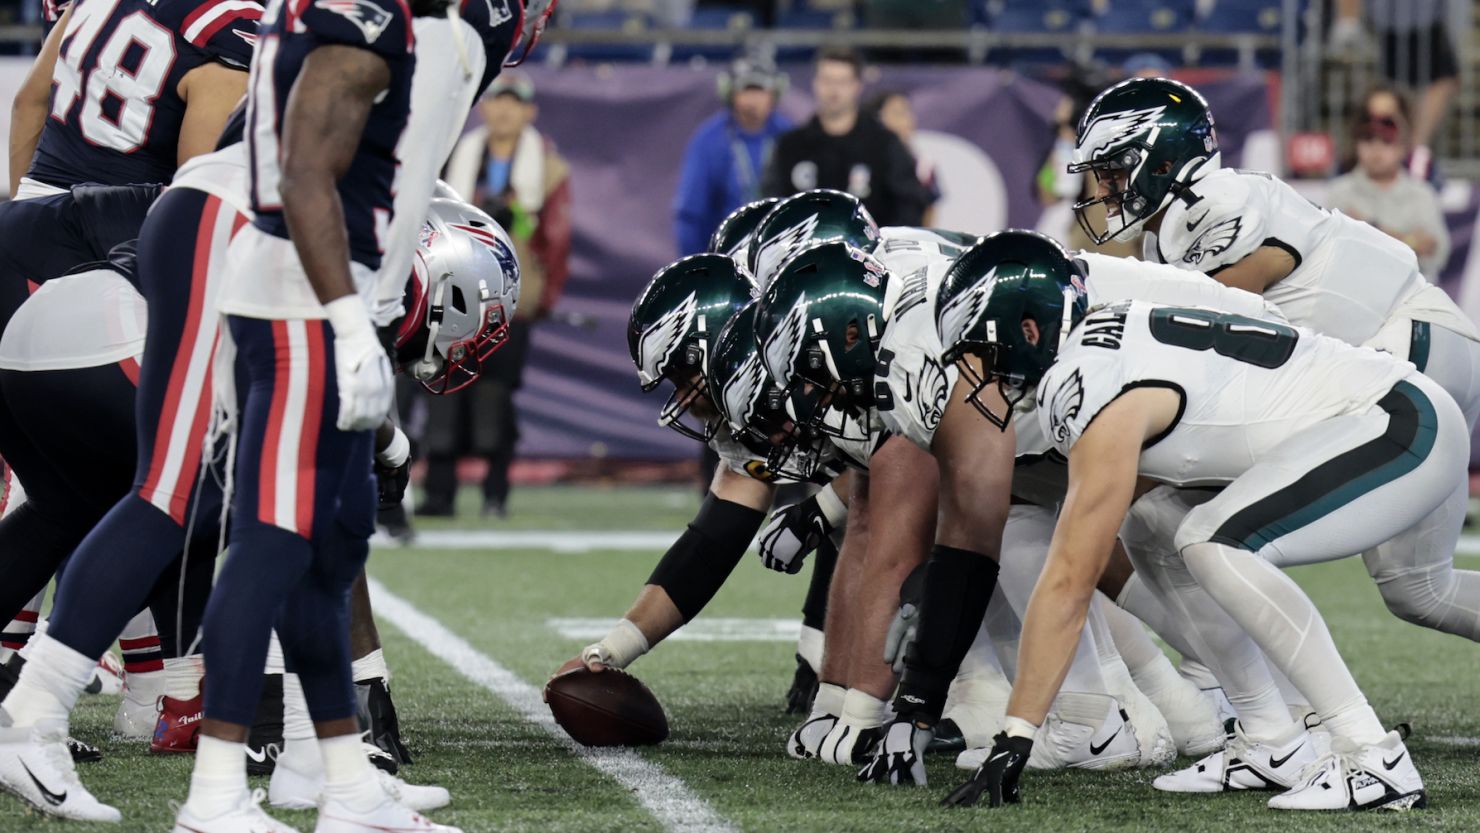 How to watch the Philadelphia Eagles vs. New England Patriots